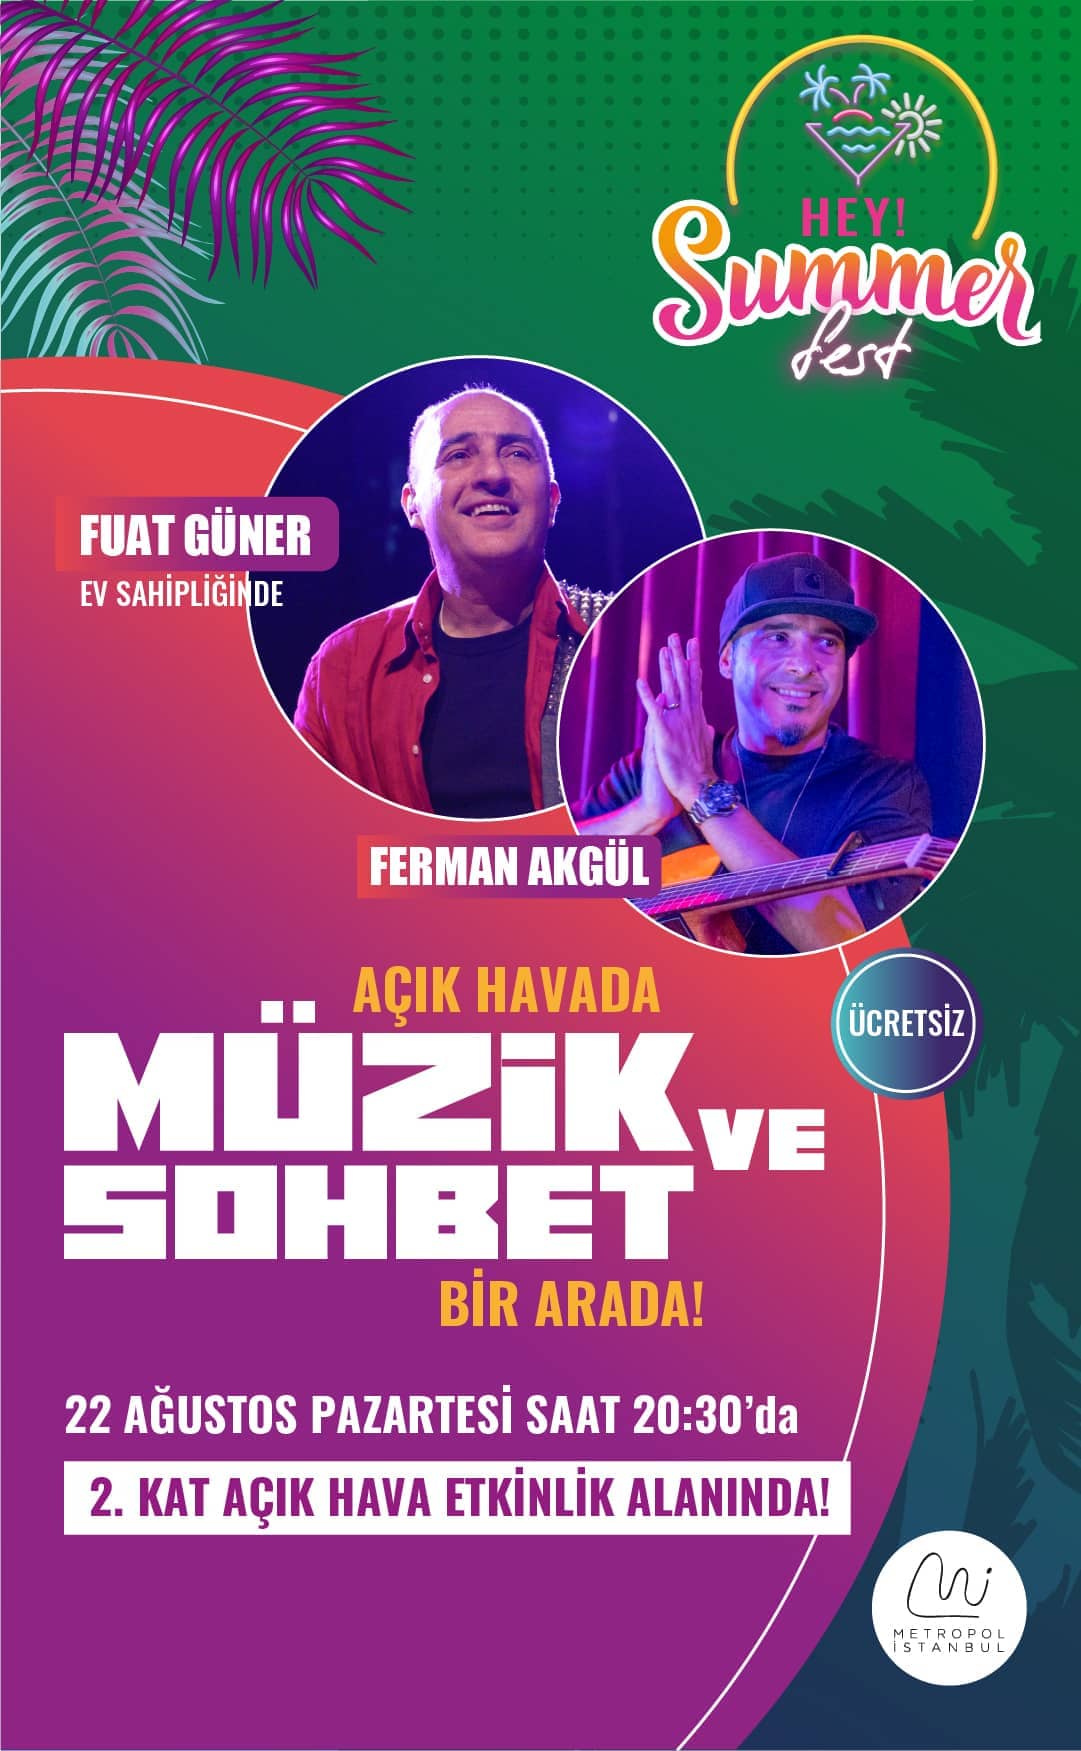 Hey! Summer Fest ile Metropol İstanbul’a Ferman Akgül geliyor!